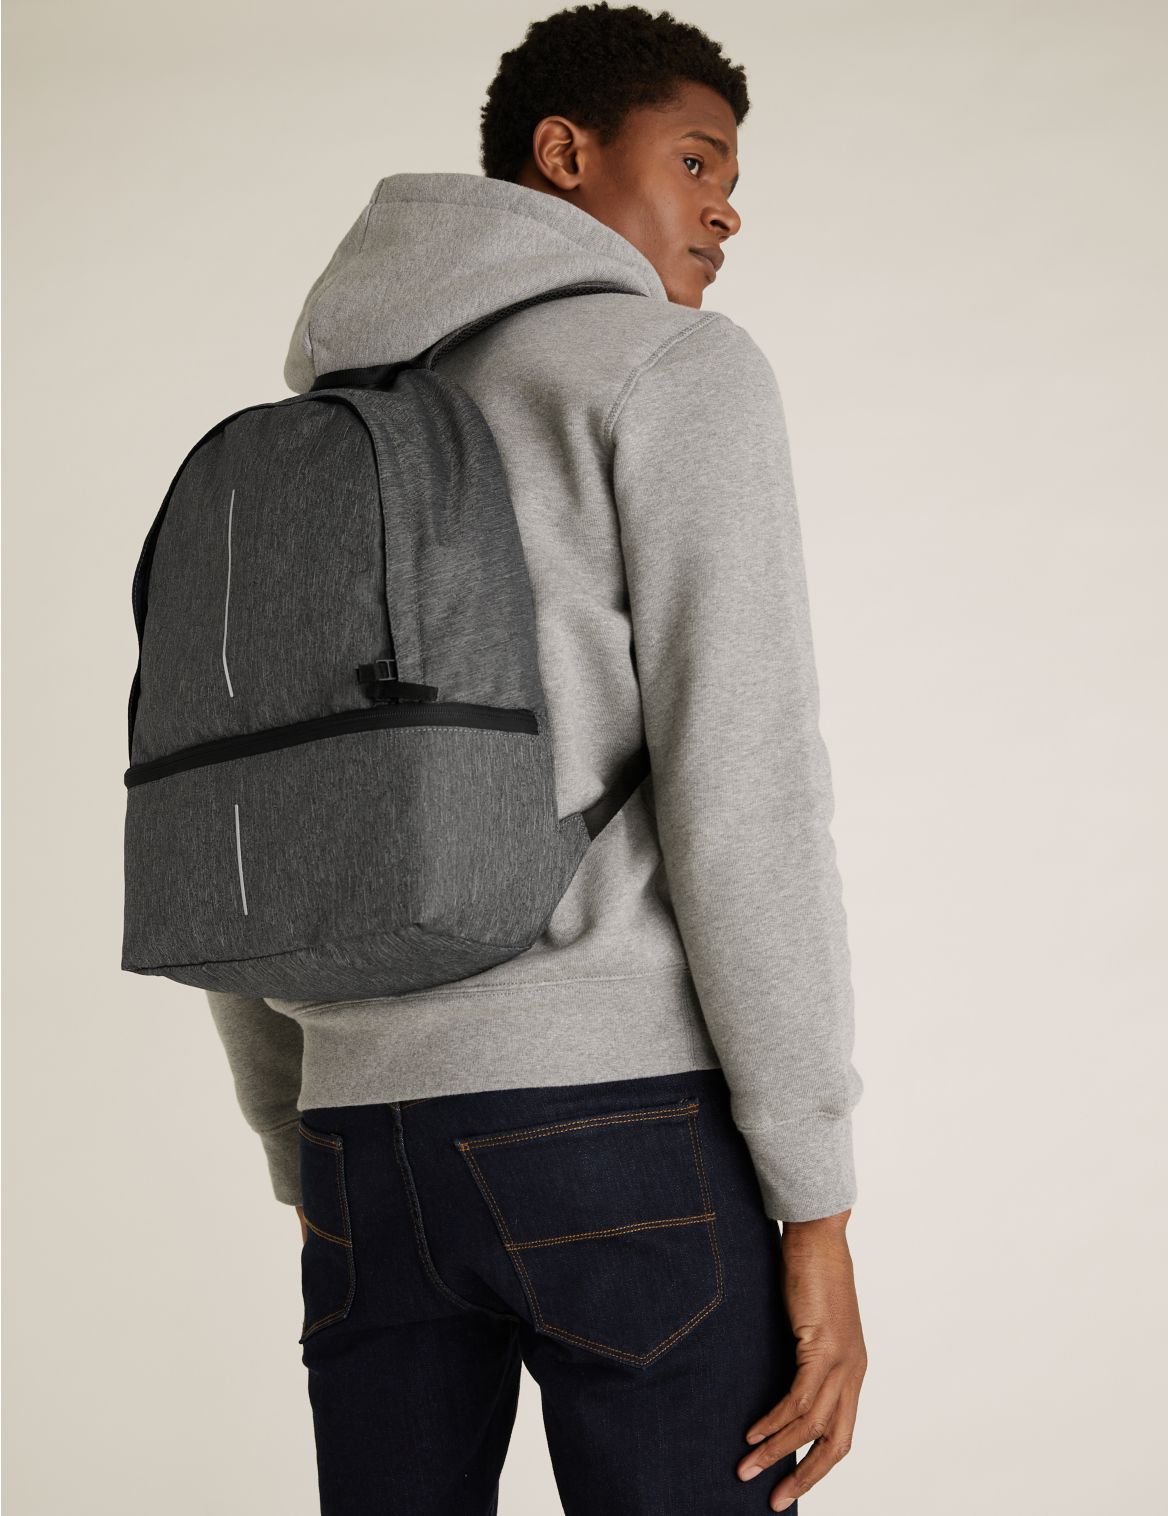 Sports Backpack grey